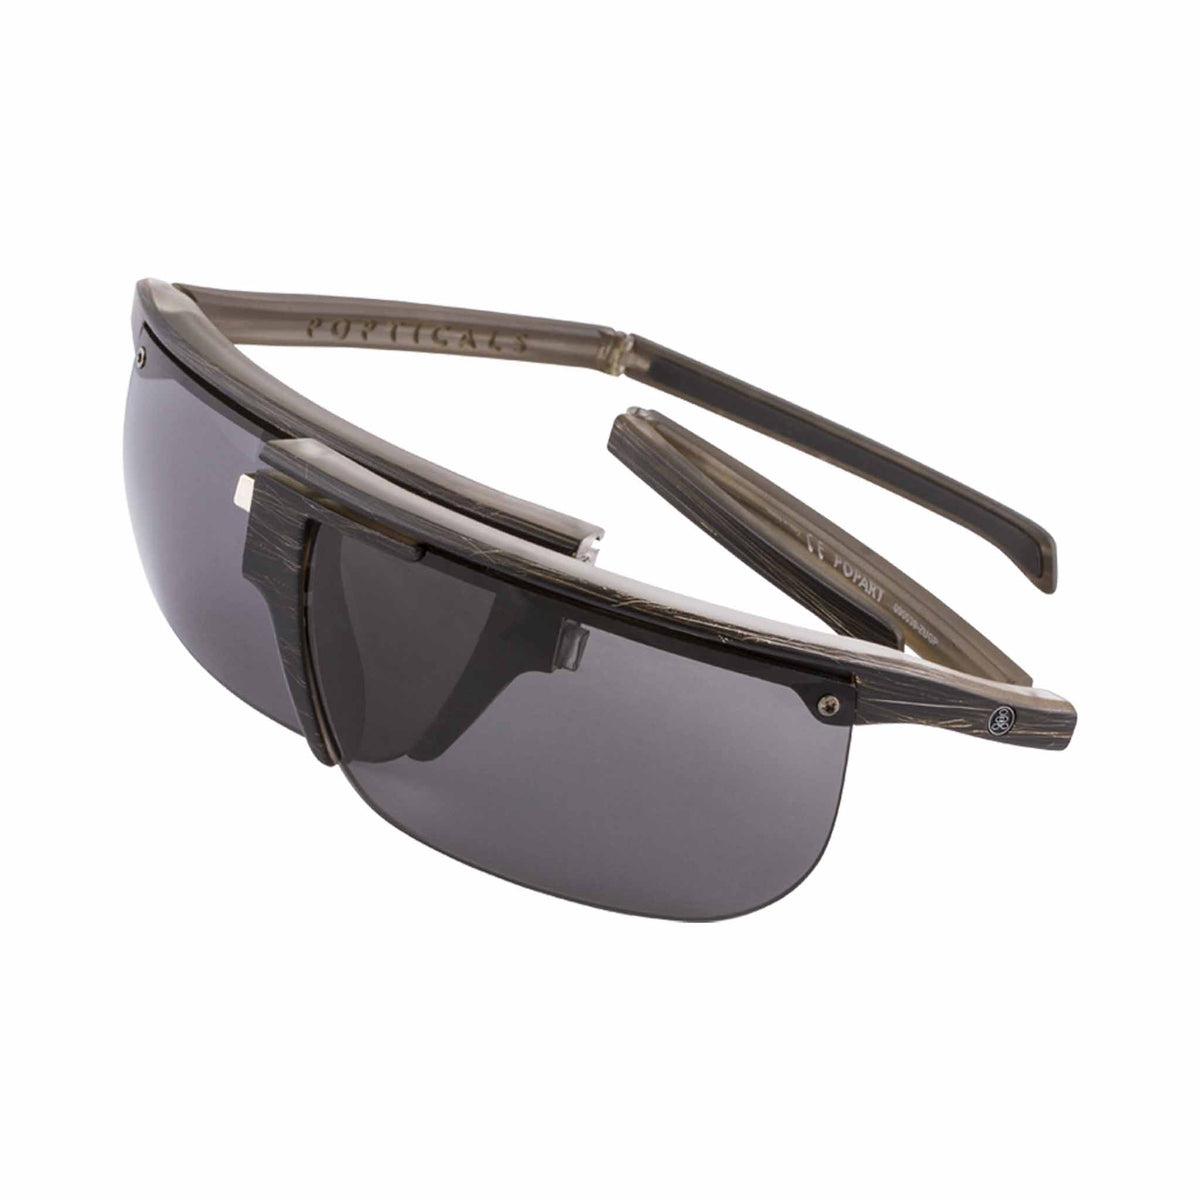 Popticals, Premium Compact Sunglasses, PopArt, 090030-ZUGP, Polarized Sunglasses, Matte Brush Black Frame, Gray Lenses, Spider View